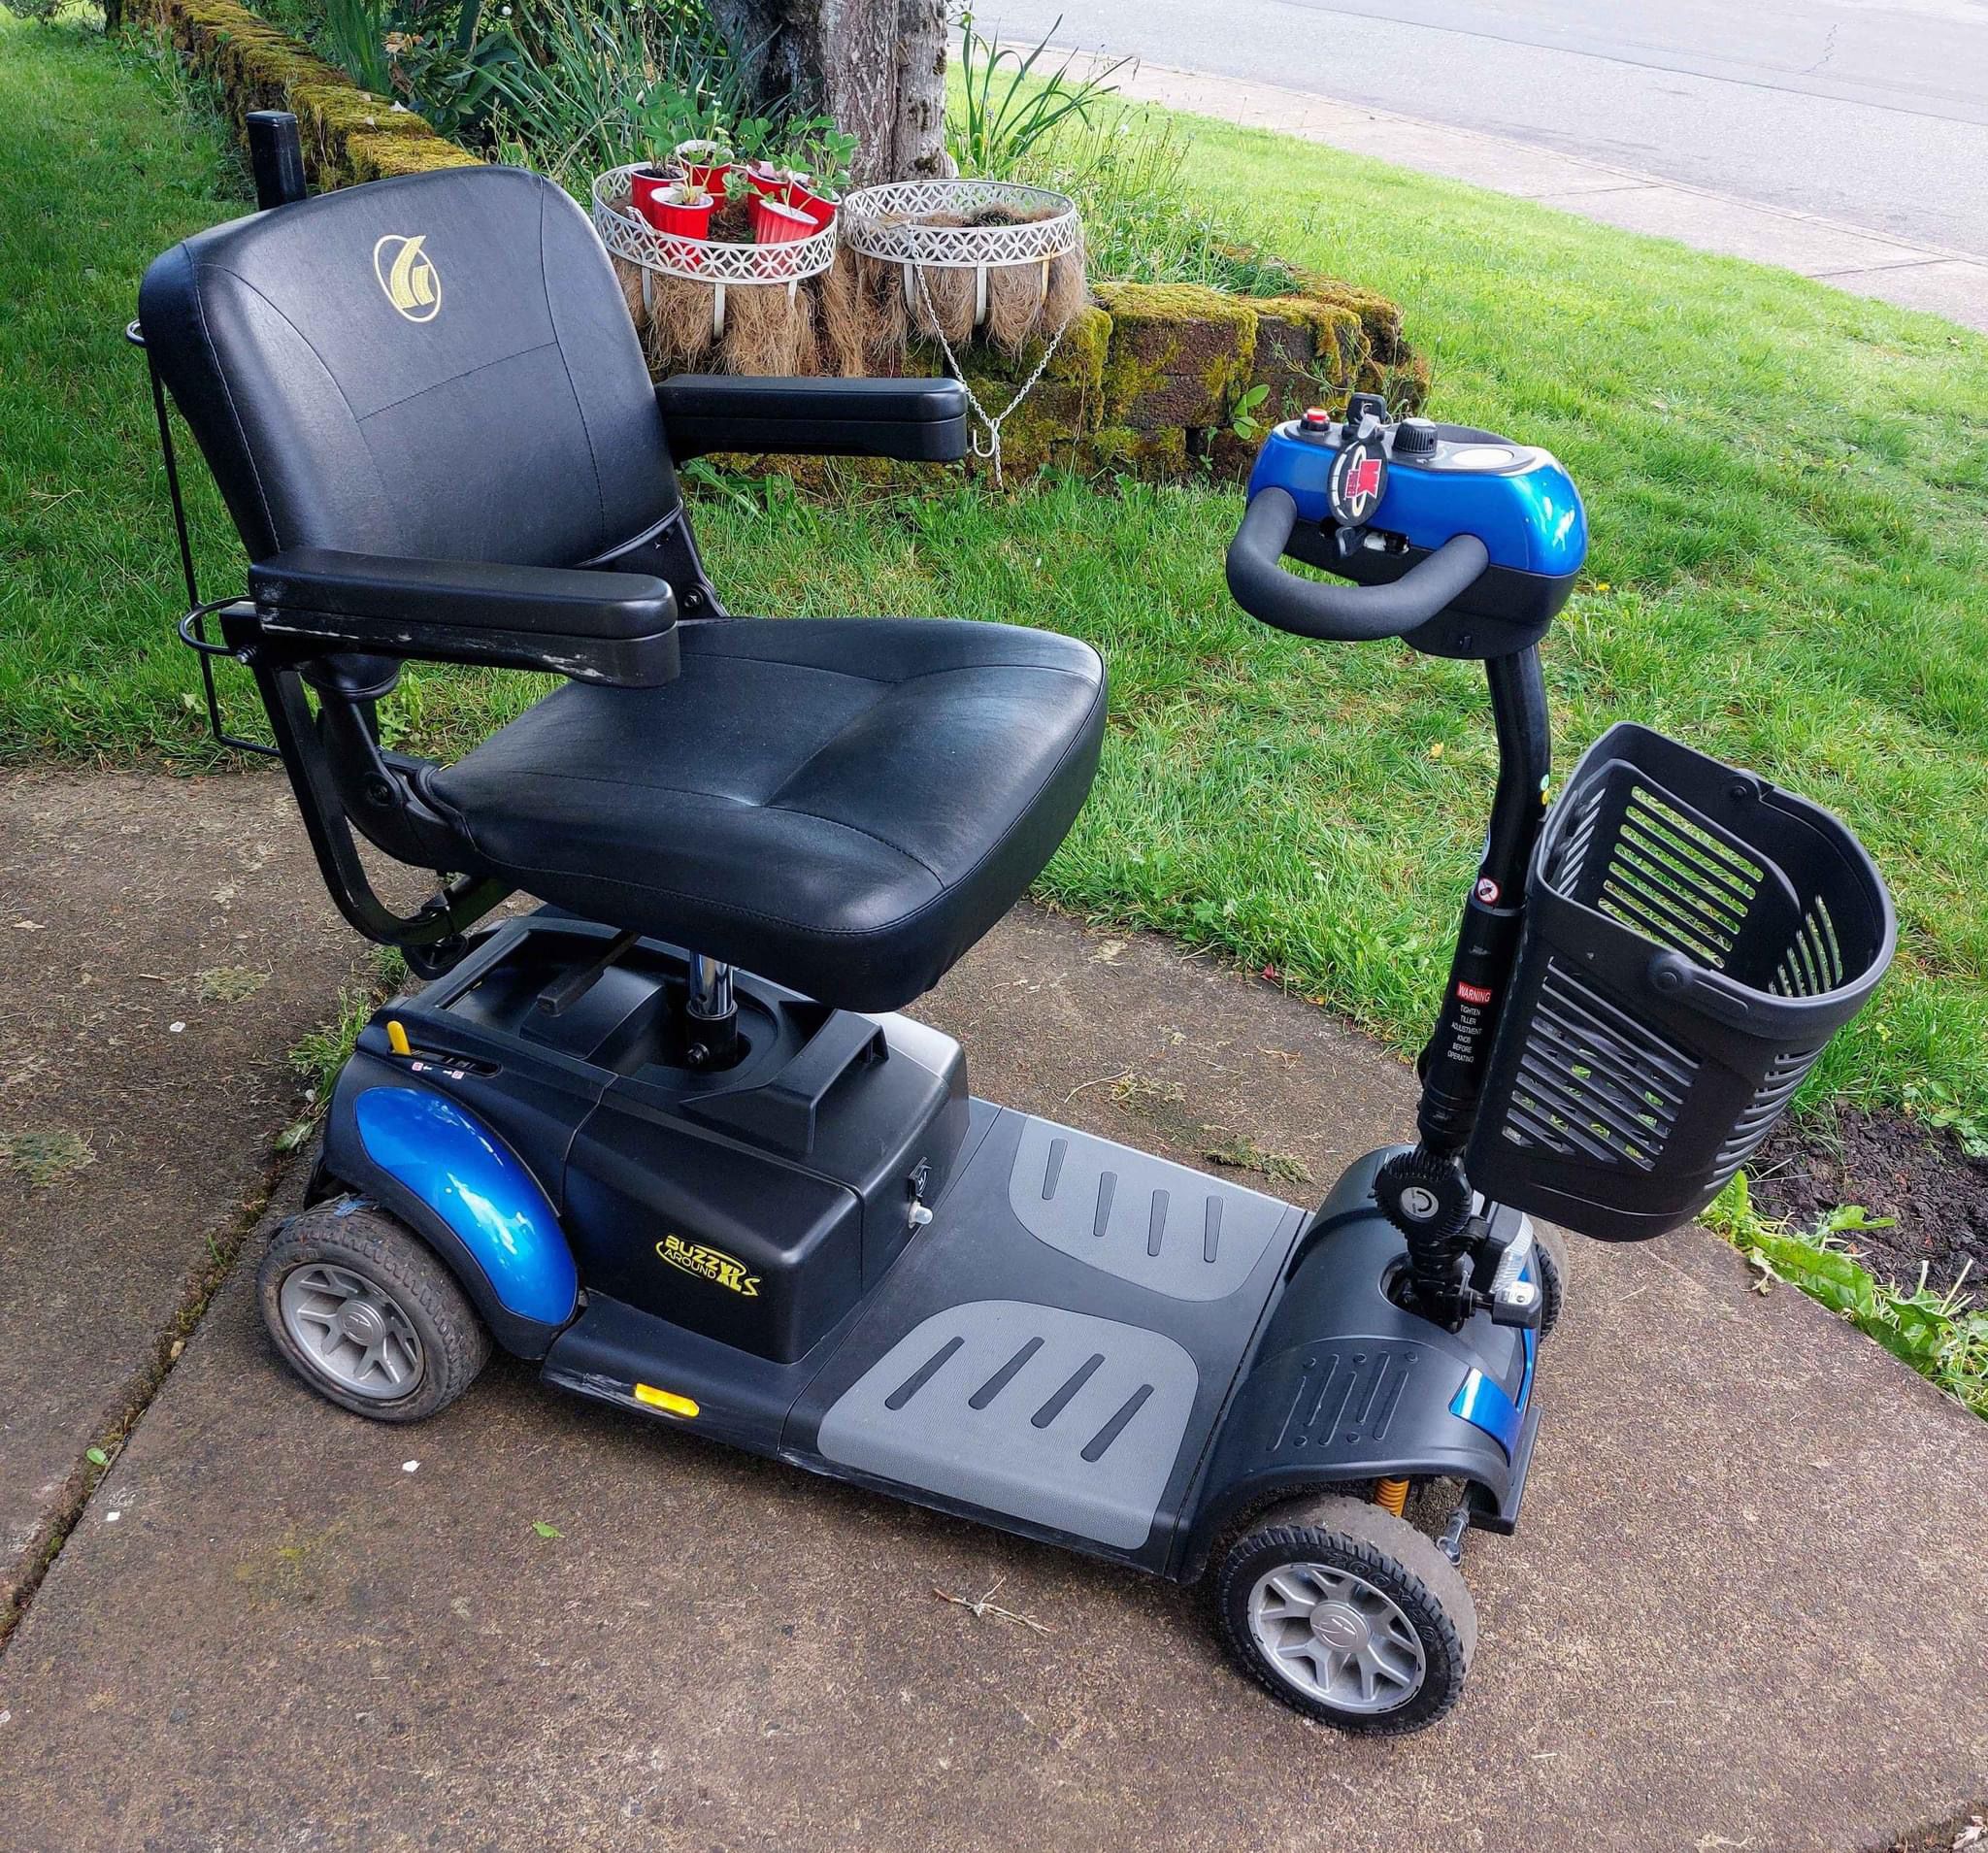 Buzz Around XLS Electric Wheelchair 